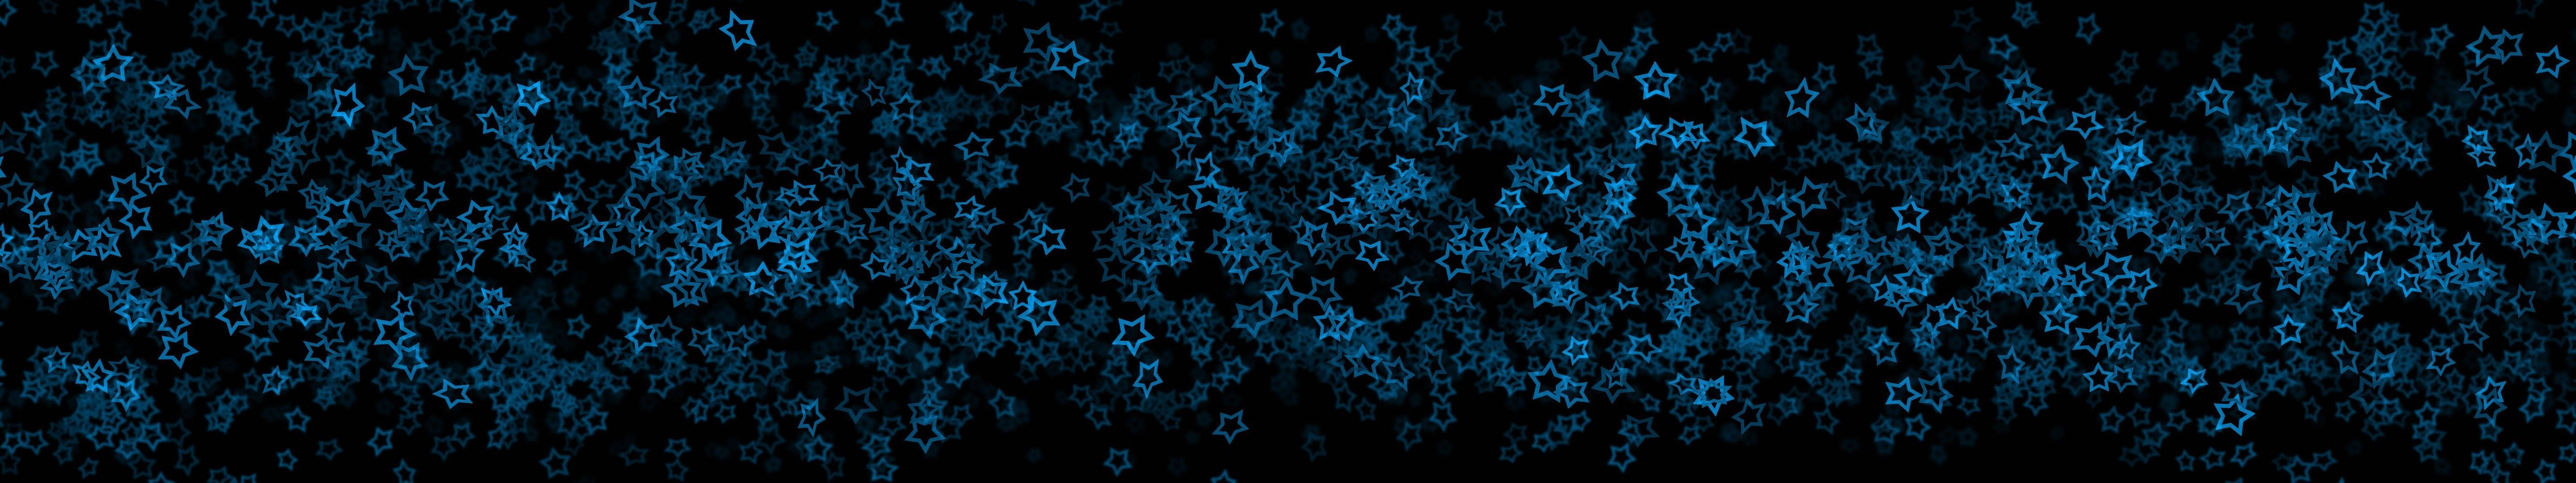 Dark Abstract Blue Star Confetti Background